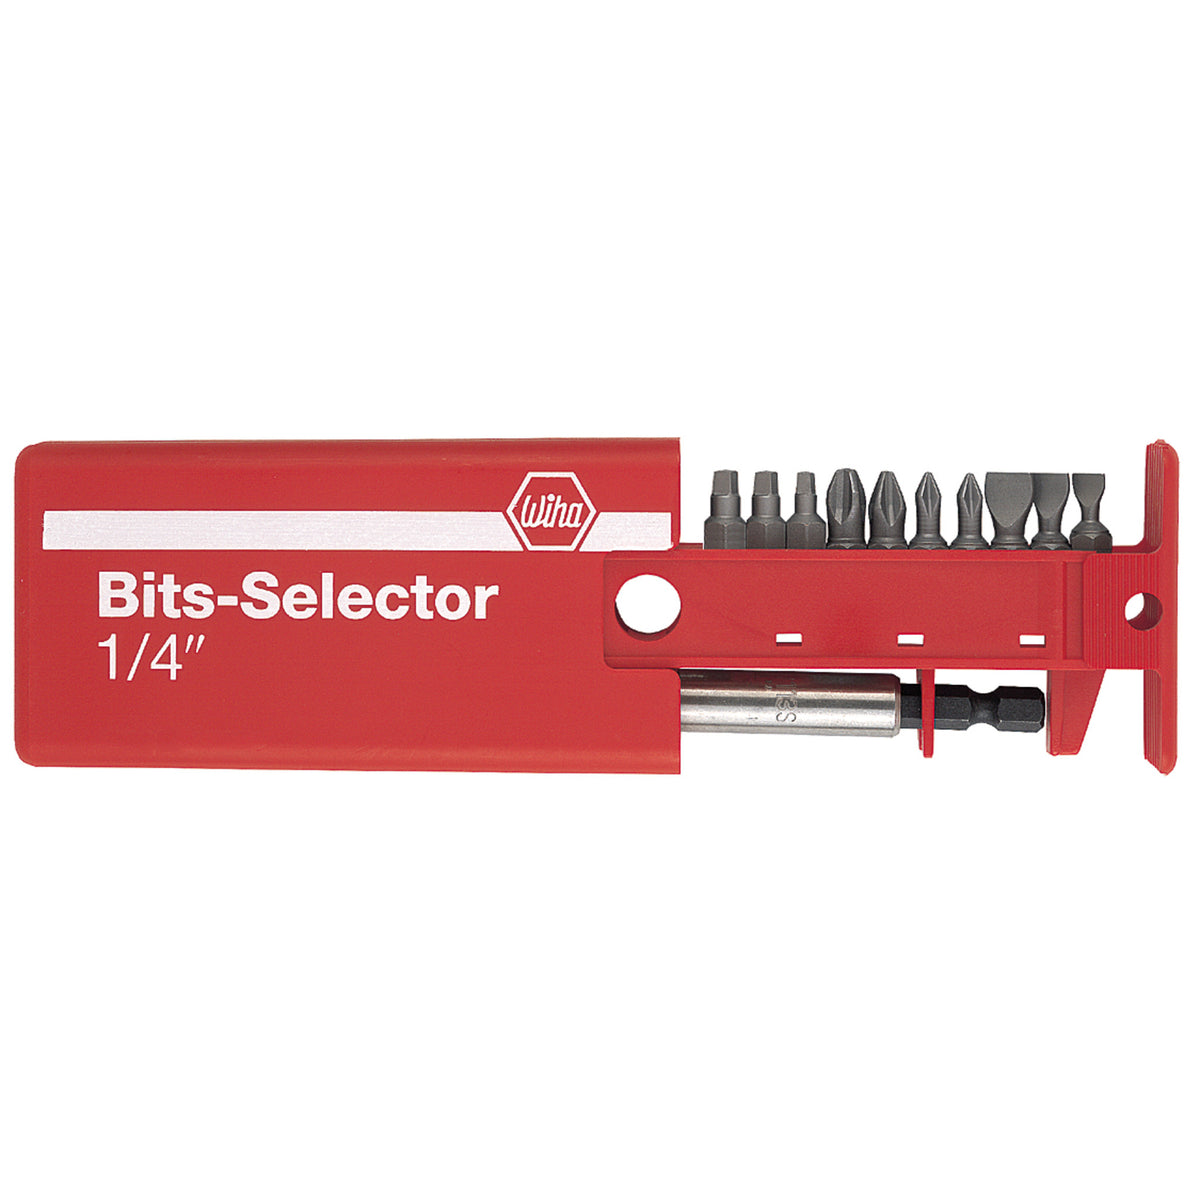 Wiha 79248 11 Piece Bits-Selector and Magnetic Bit Holder Set